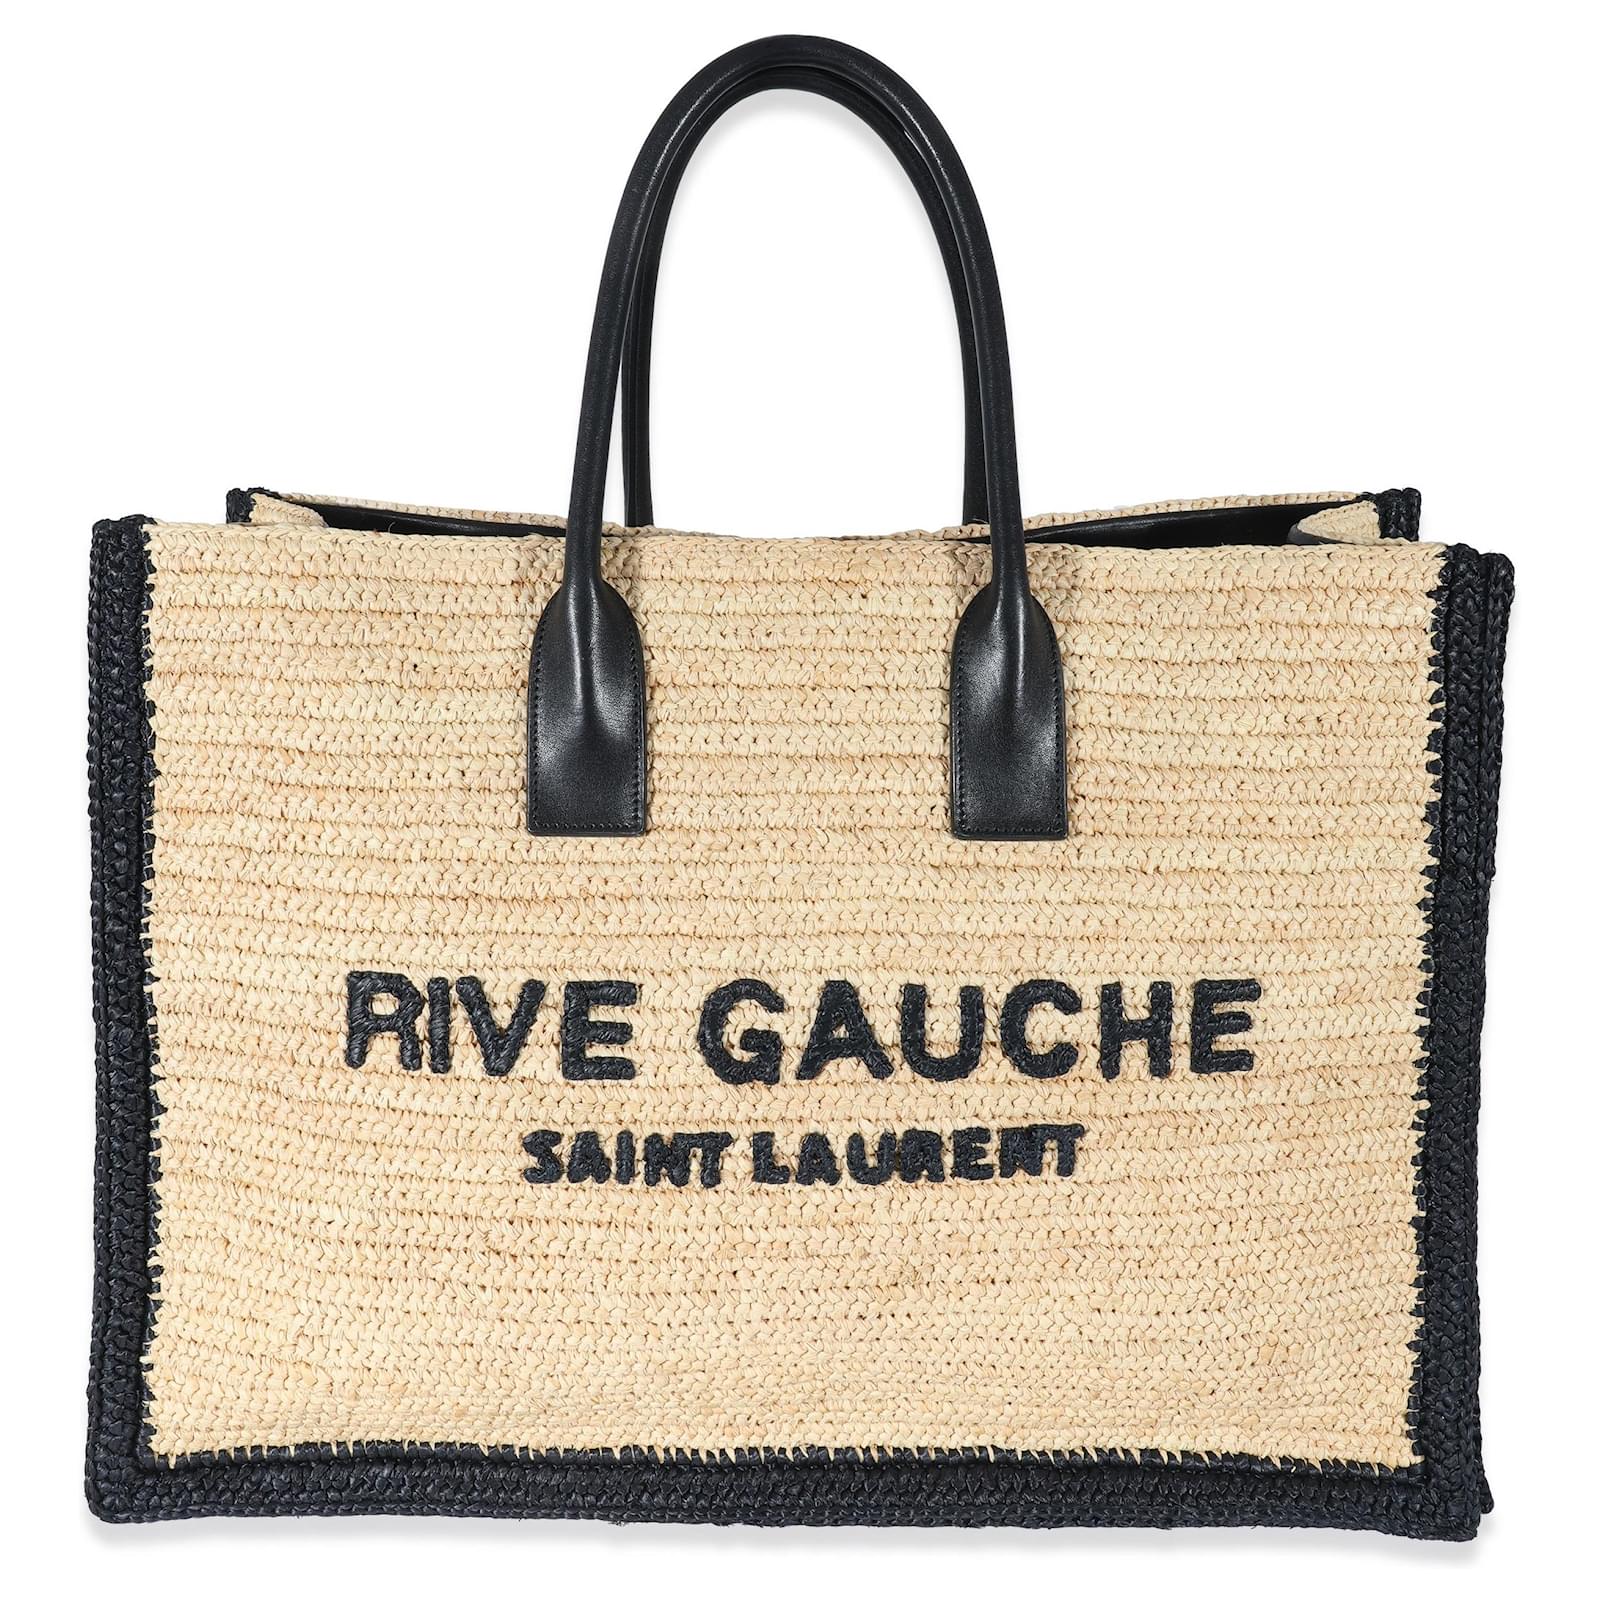 Saint Laurent Rive Gauche Small Canvas Tote Bag In Neutral